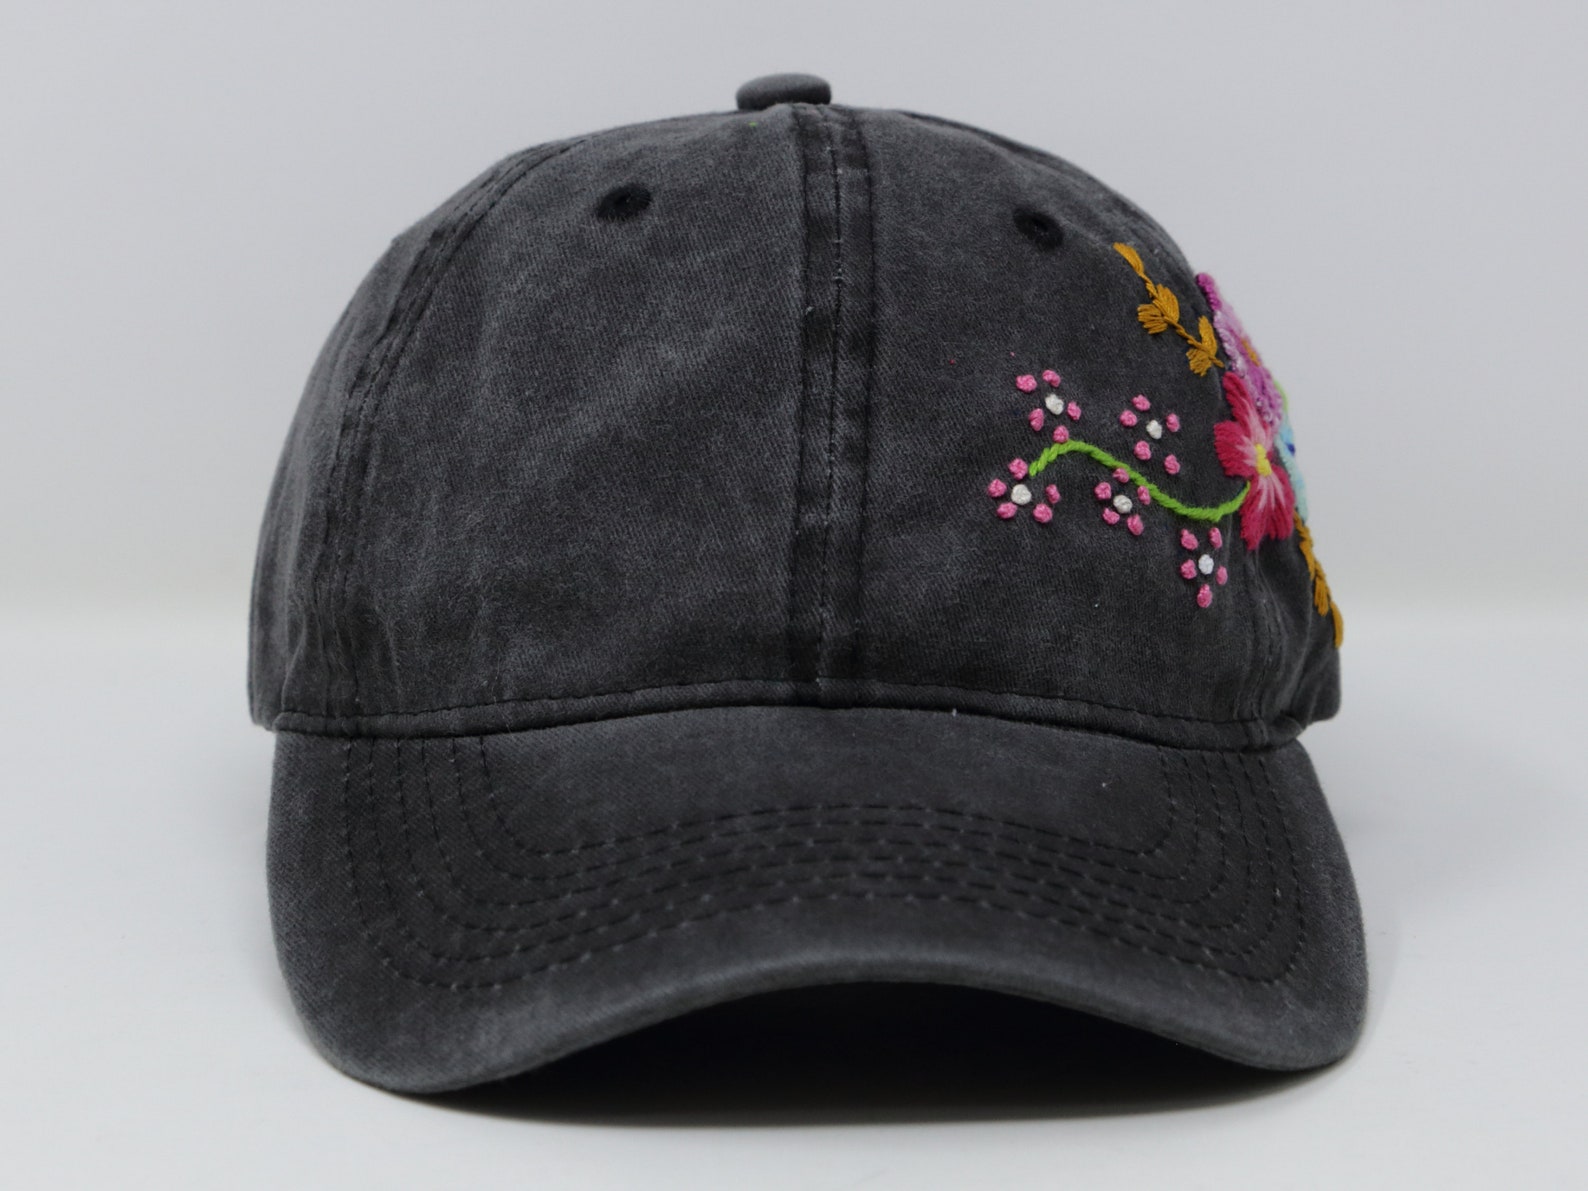 Wash Cotton Black Baseball Cap Hand Embroidered Flower Hat - Etsy